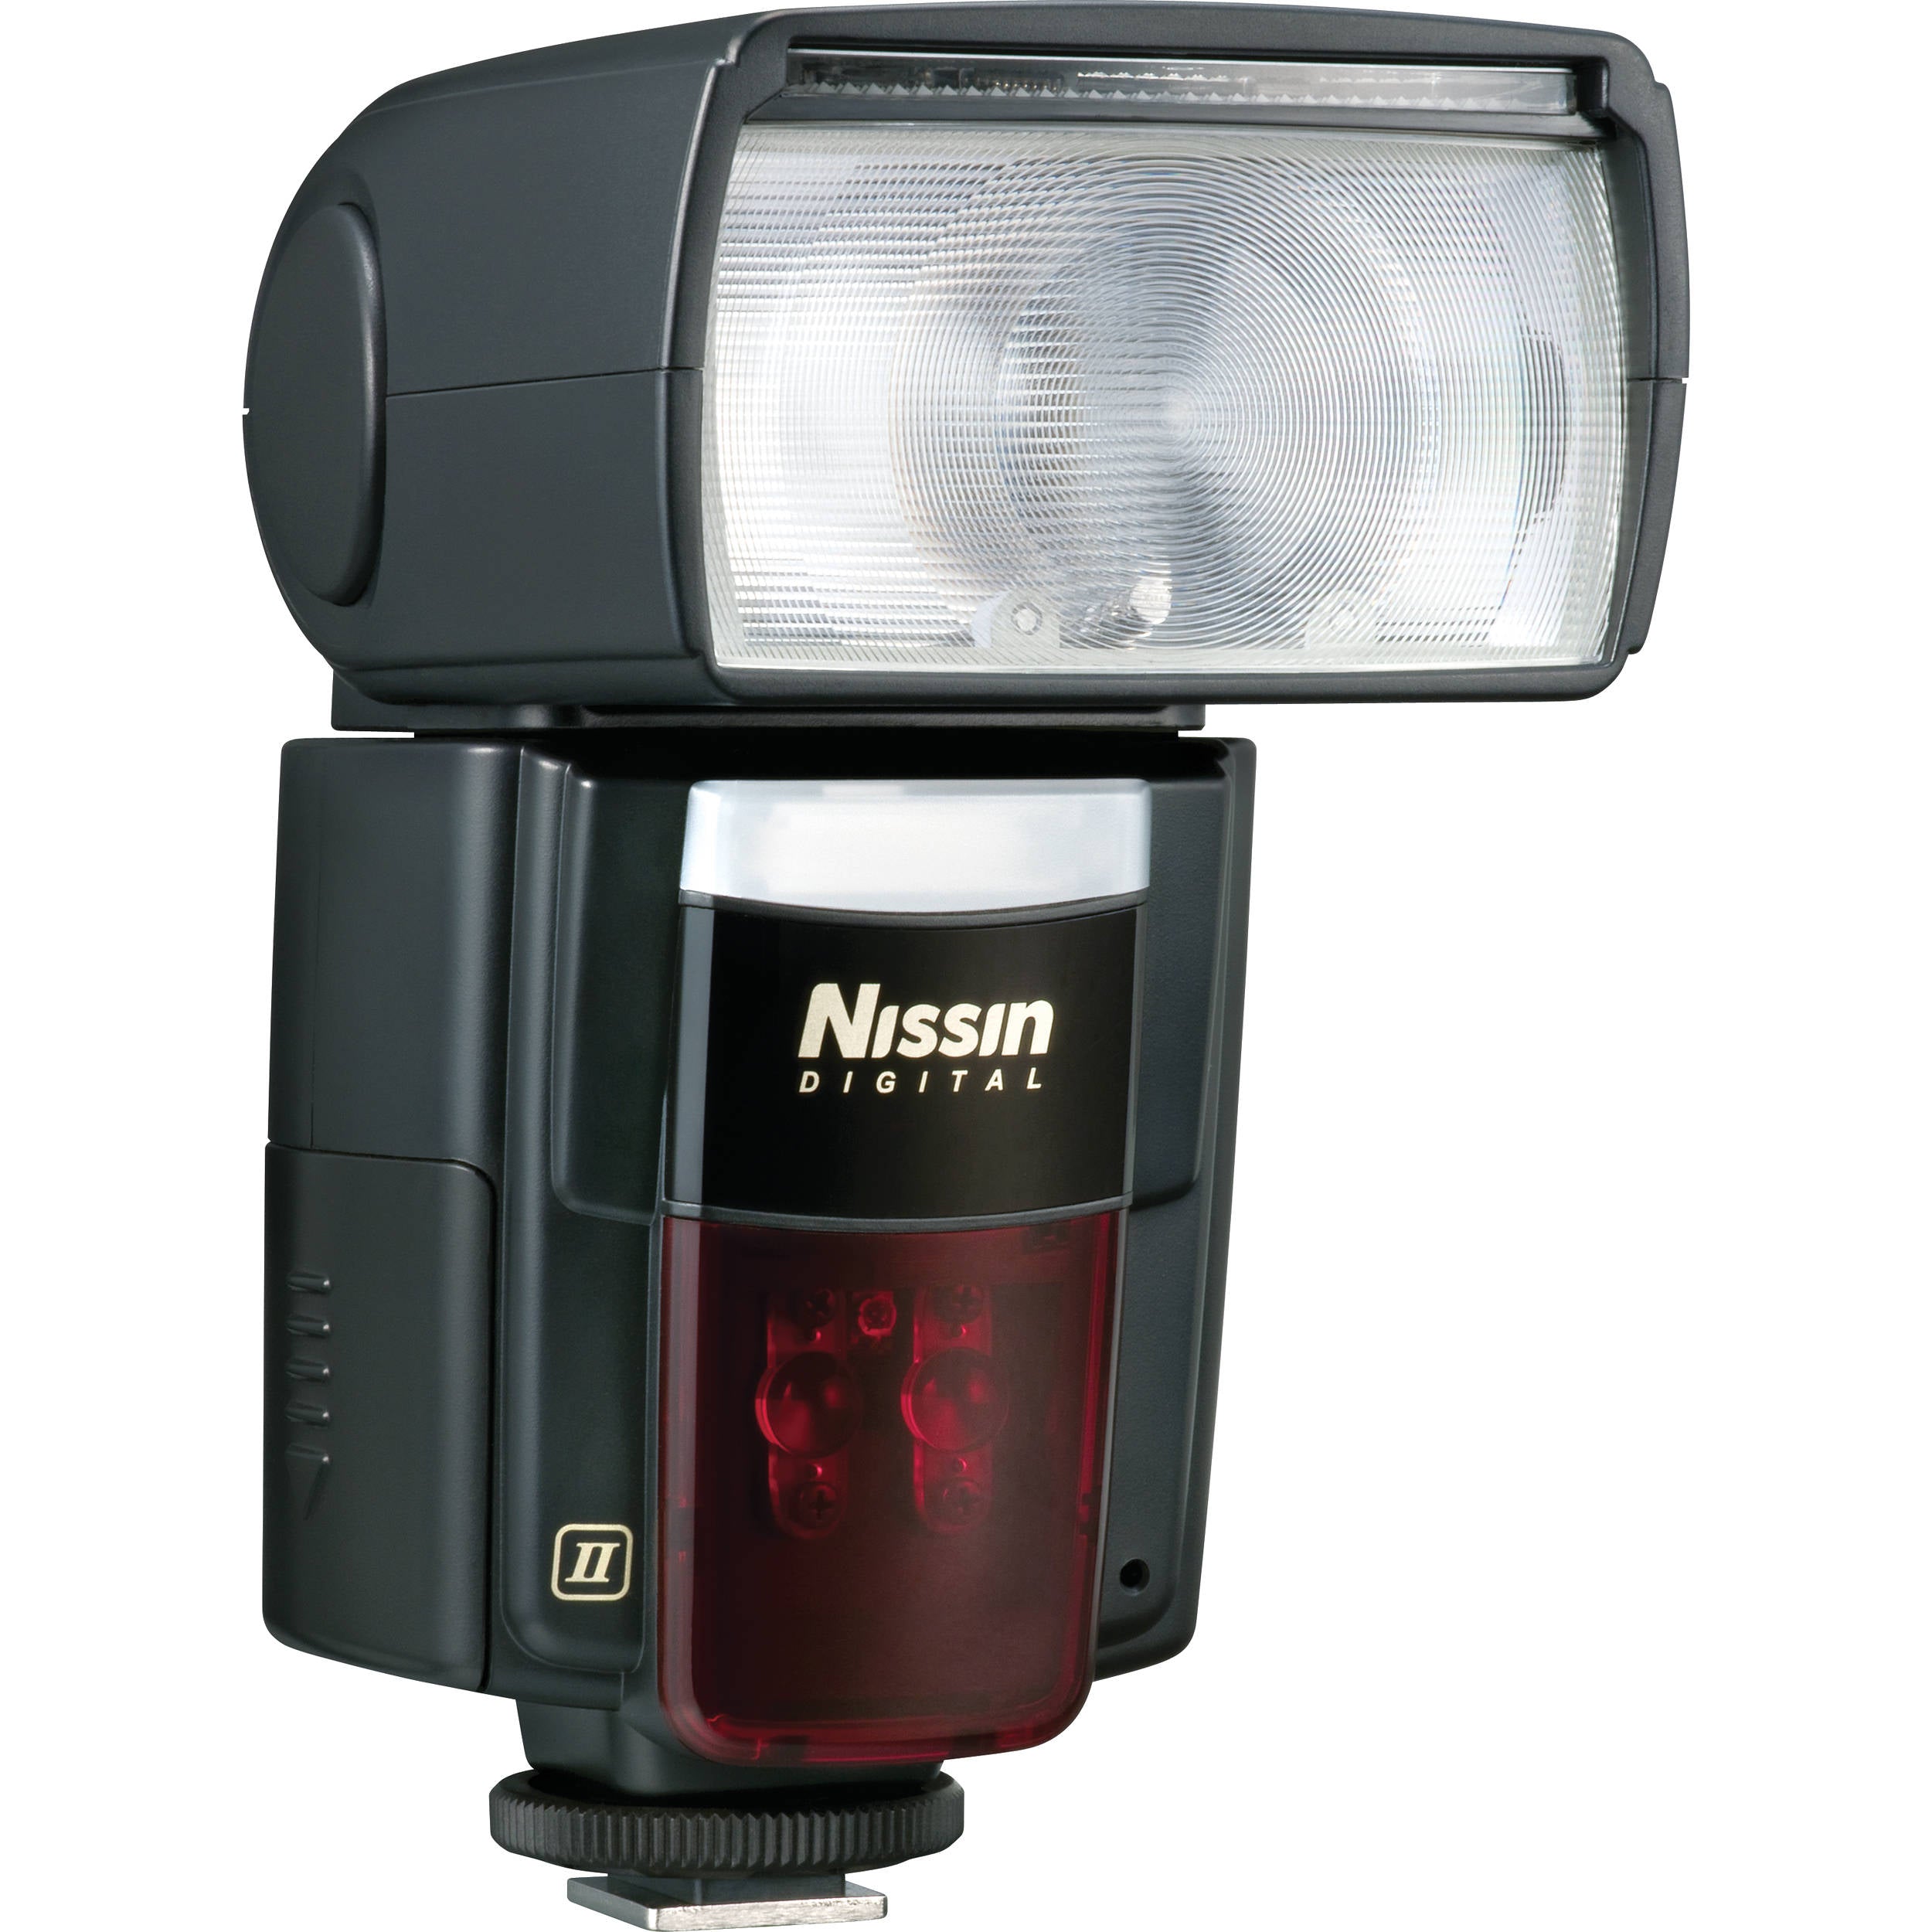 Nissin Di866 MkII Flash - Sony